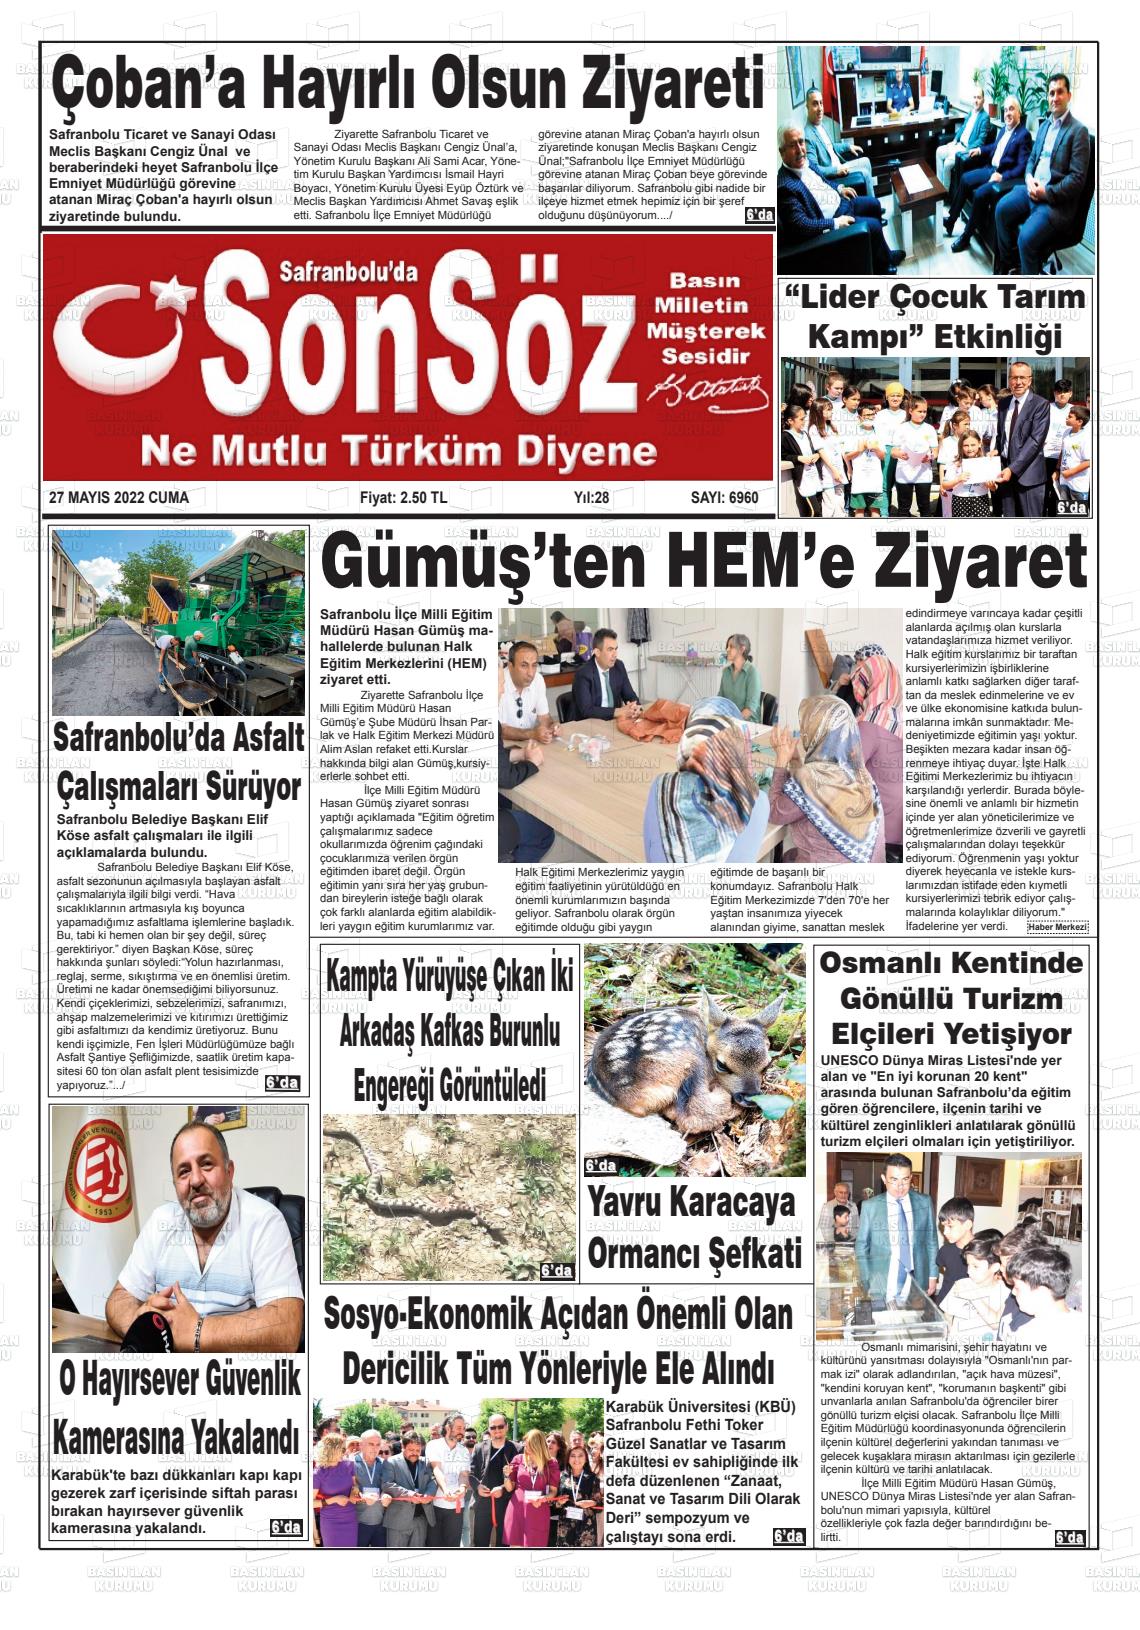 27 Mayıs 2022 Safranboluda Sonsöz Gazete Manşeti